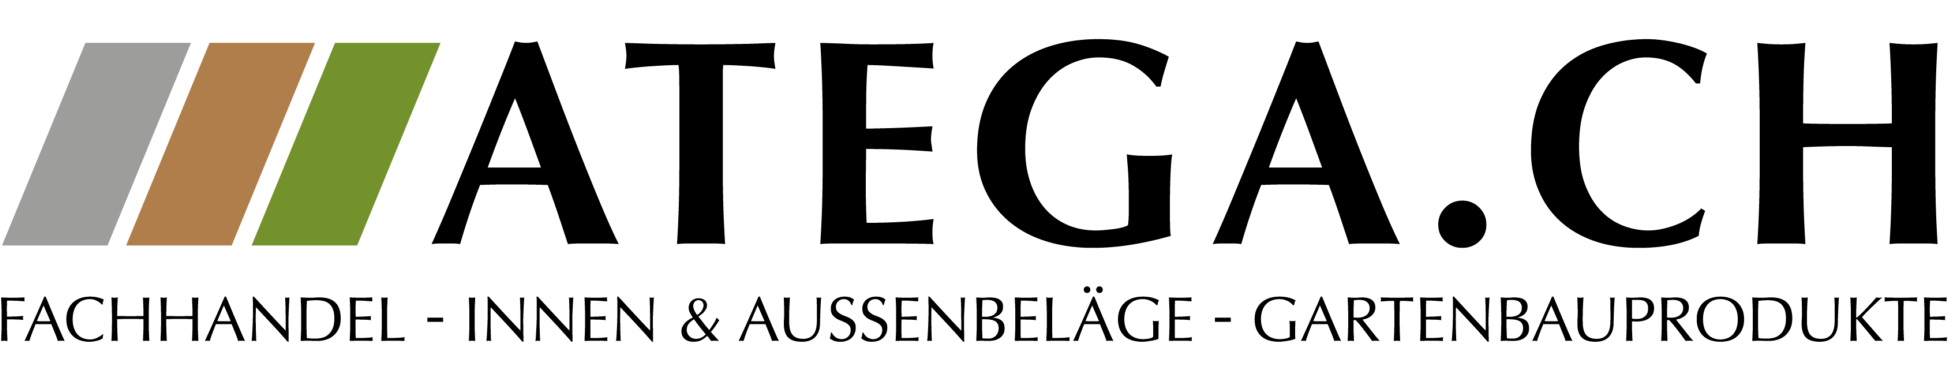 atega-gartenbauprodukte-logo